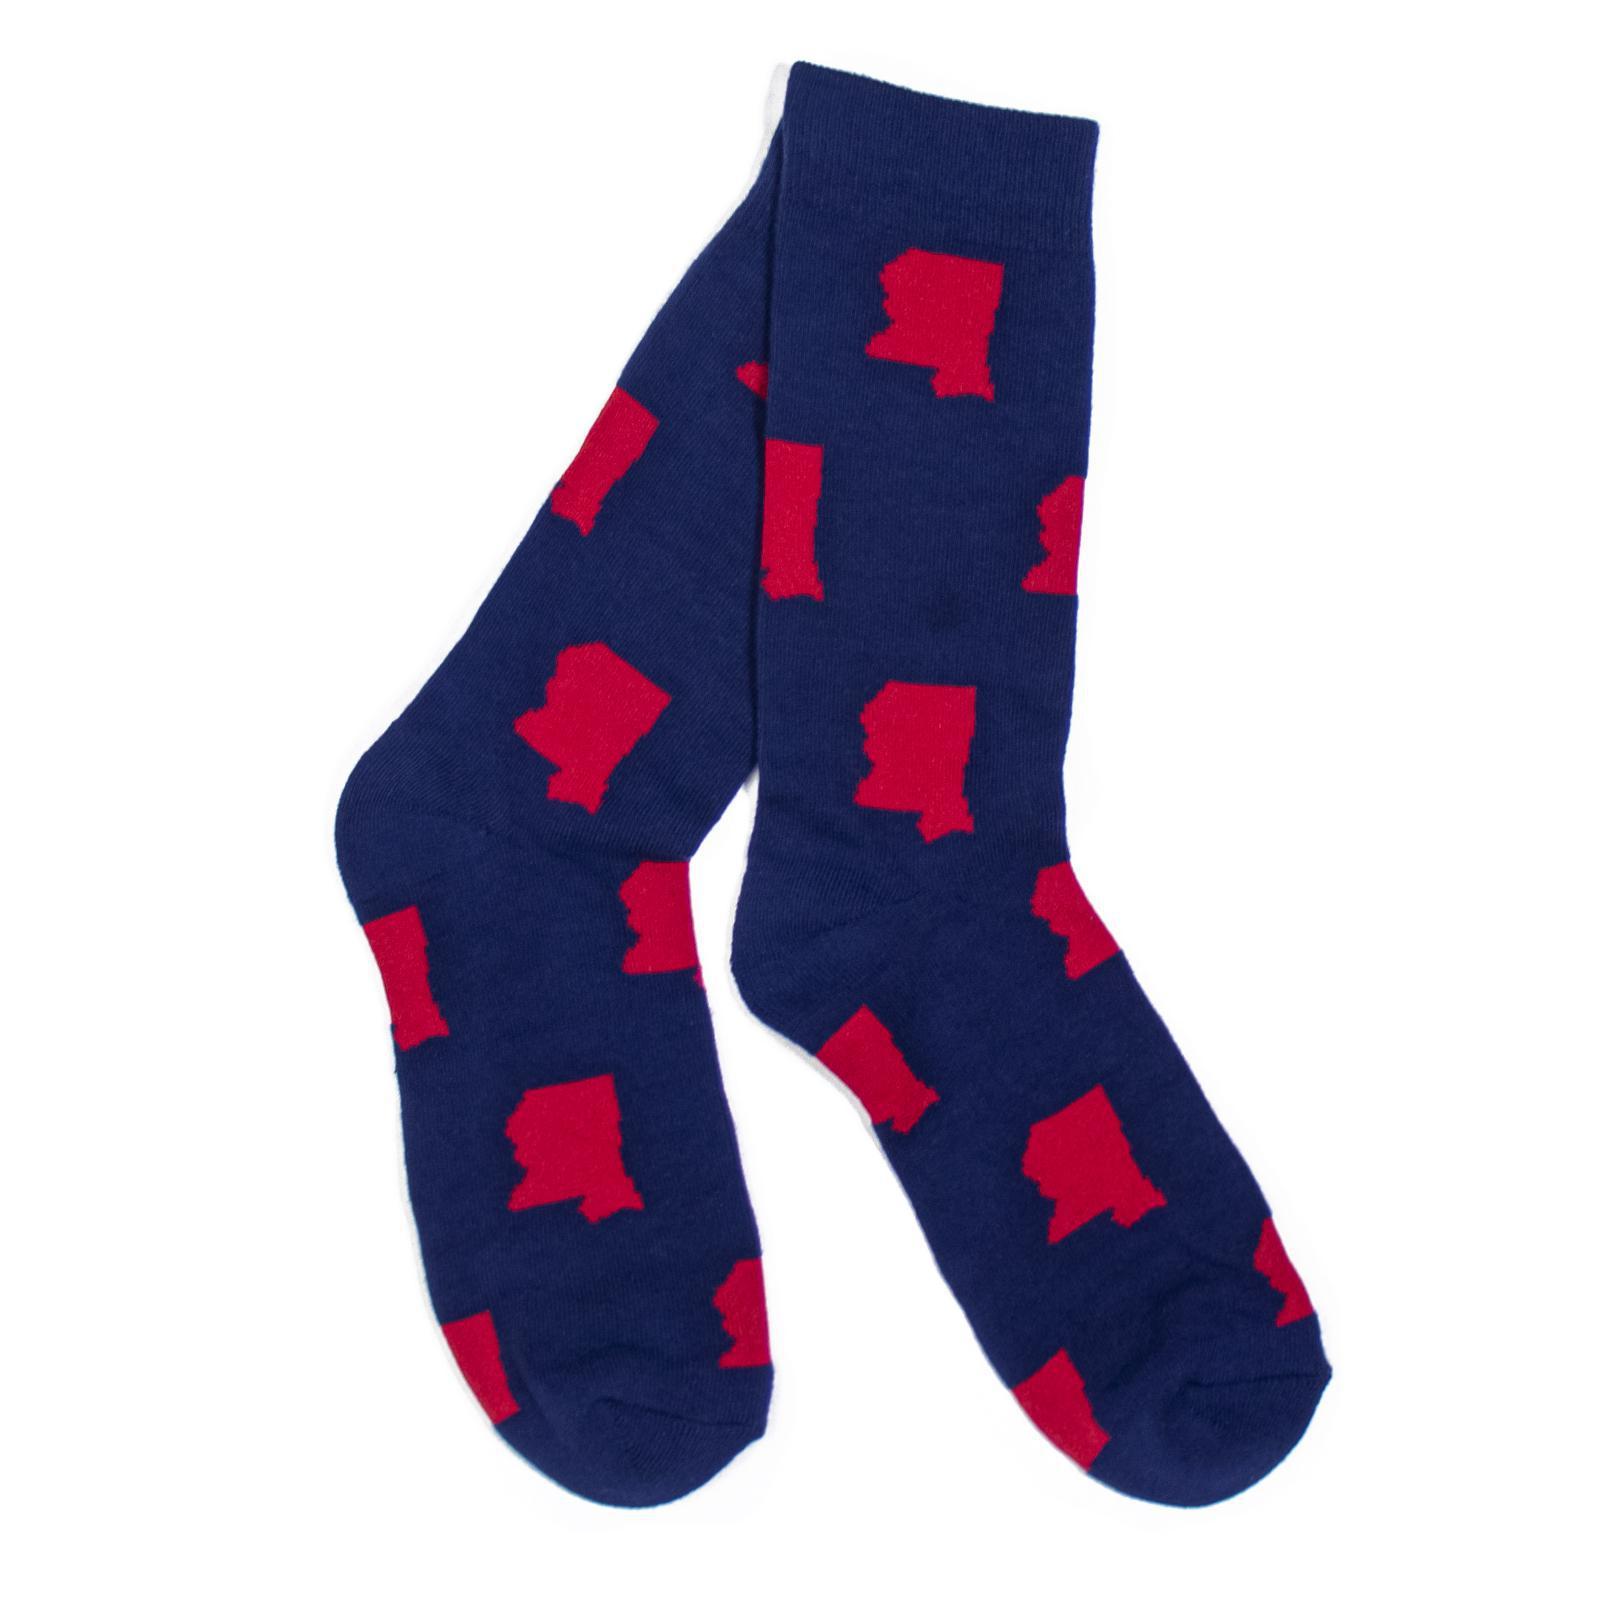 MS Shape Socks (Navy)-socks-Southern Socks